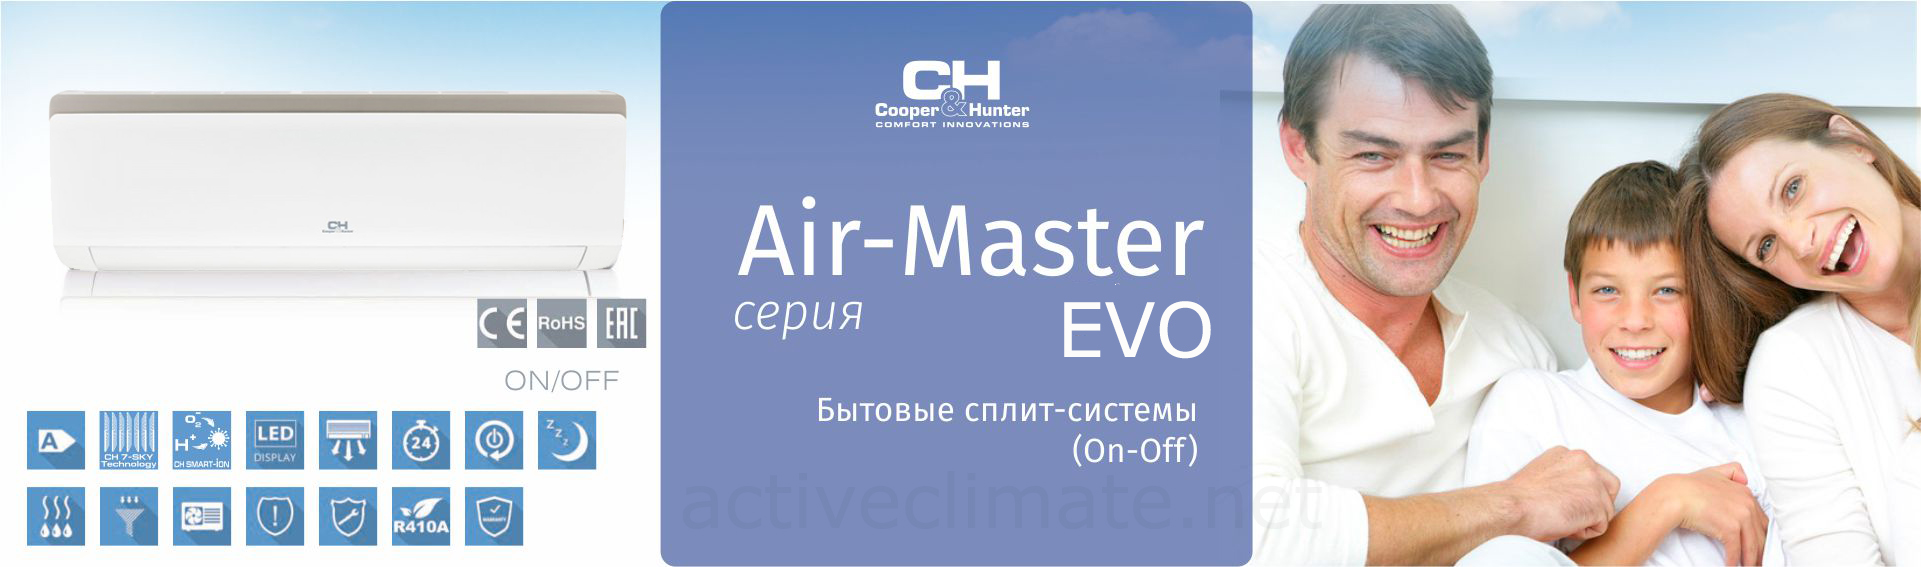 Серия Air Master Evo